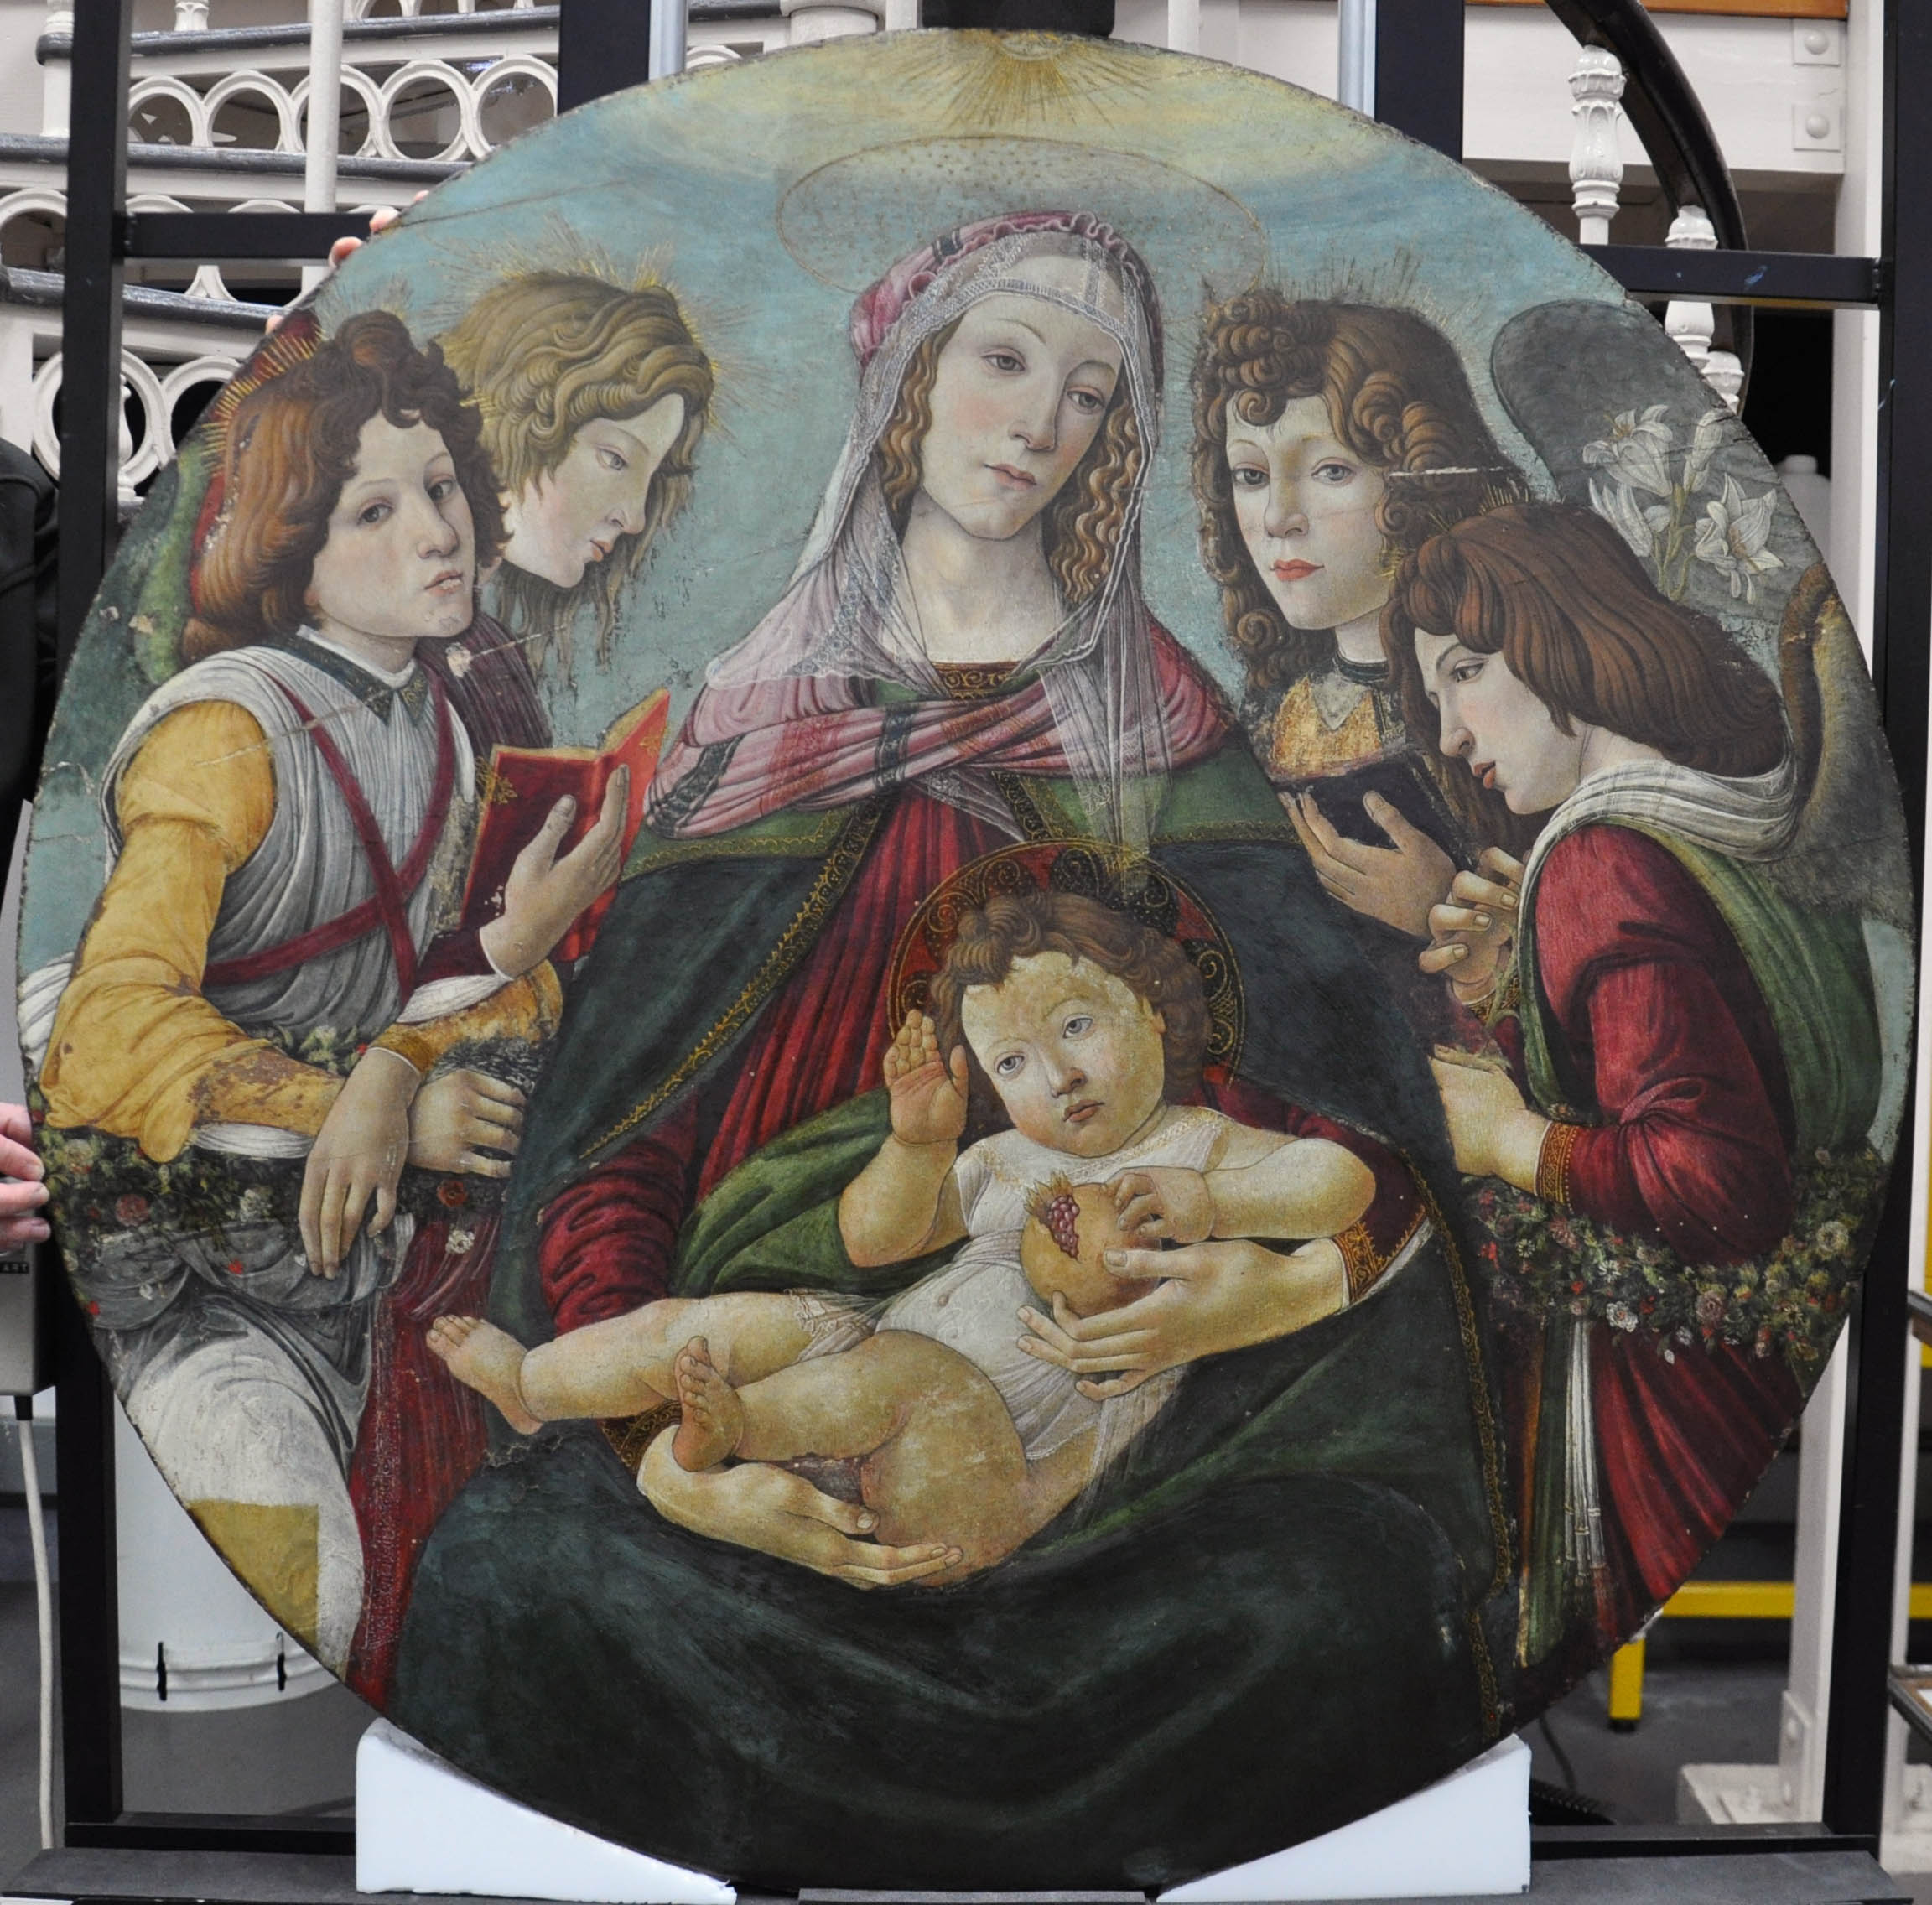 Botticelli's masterpiece 